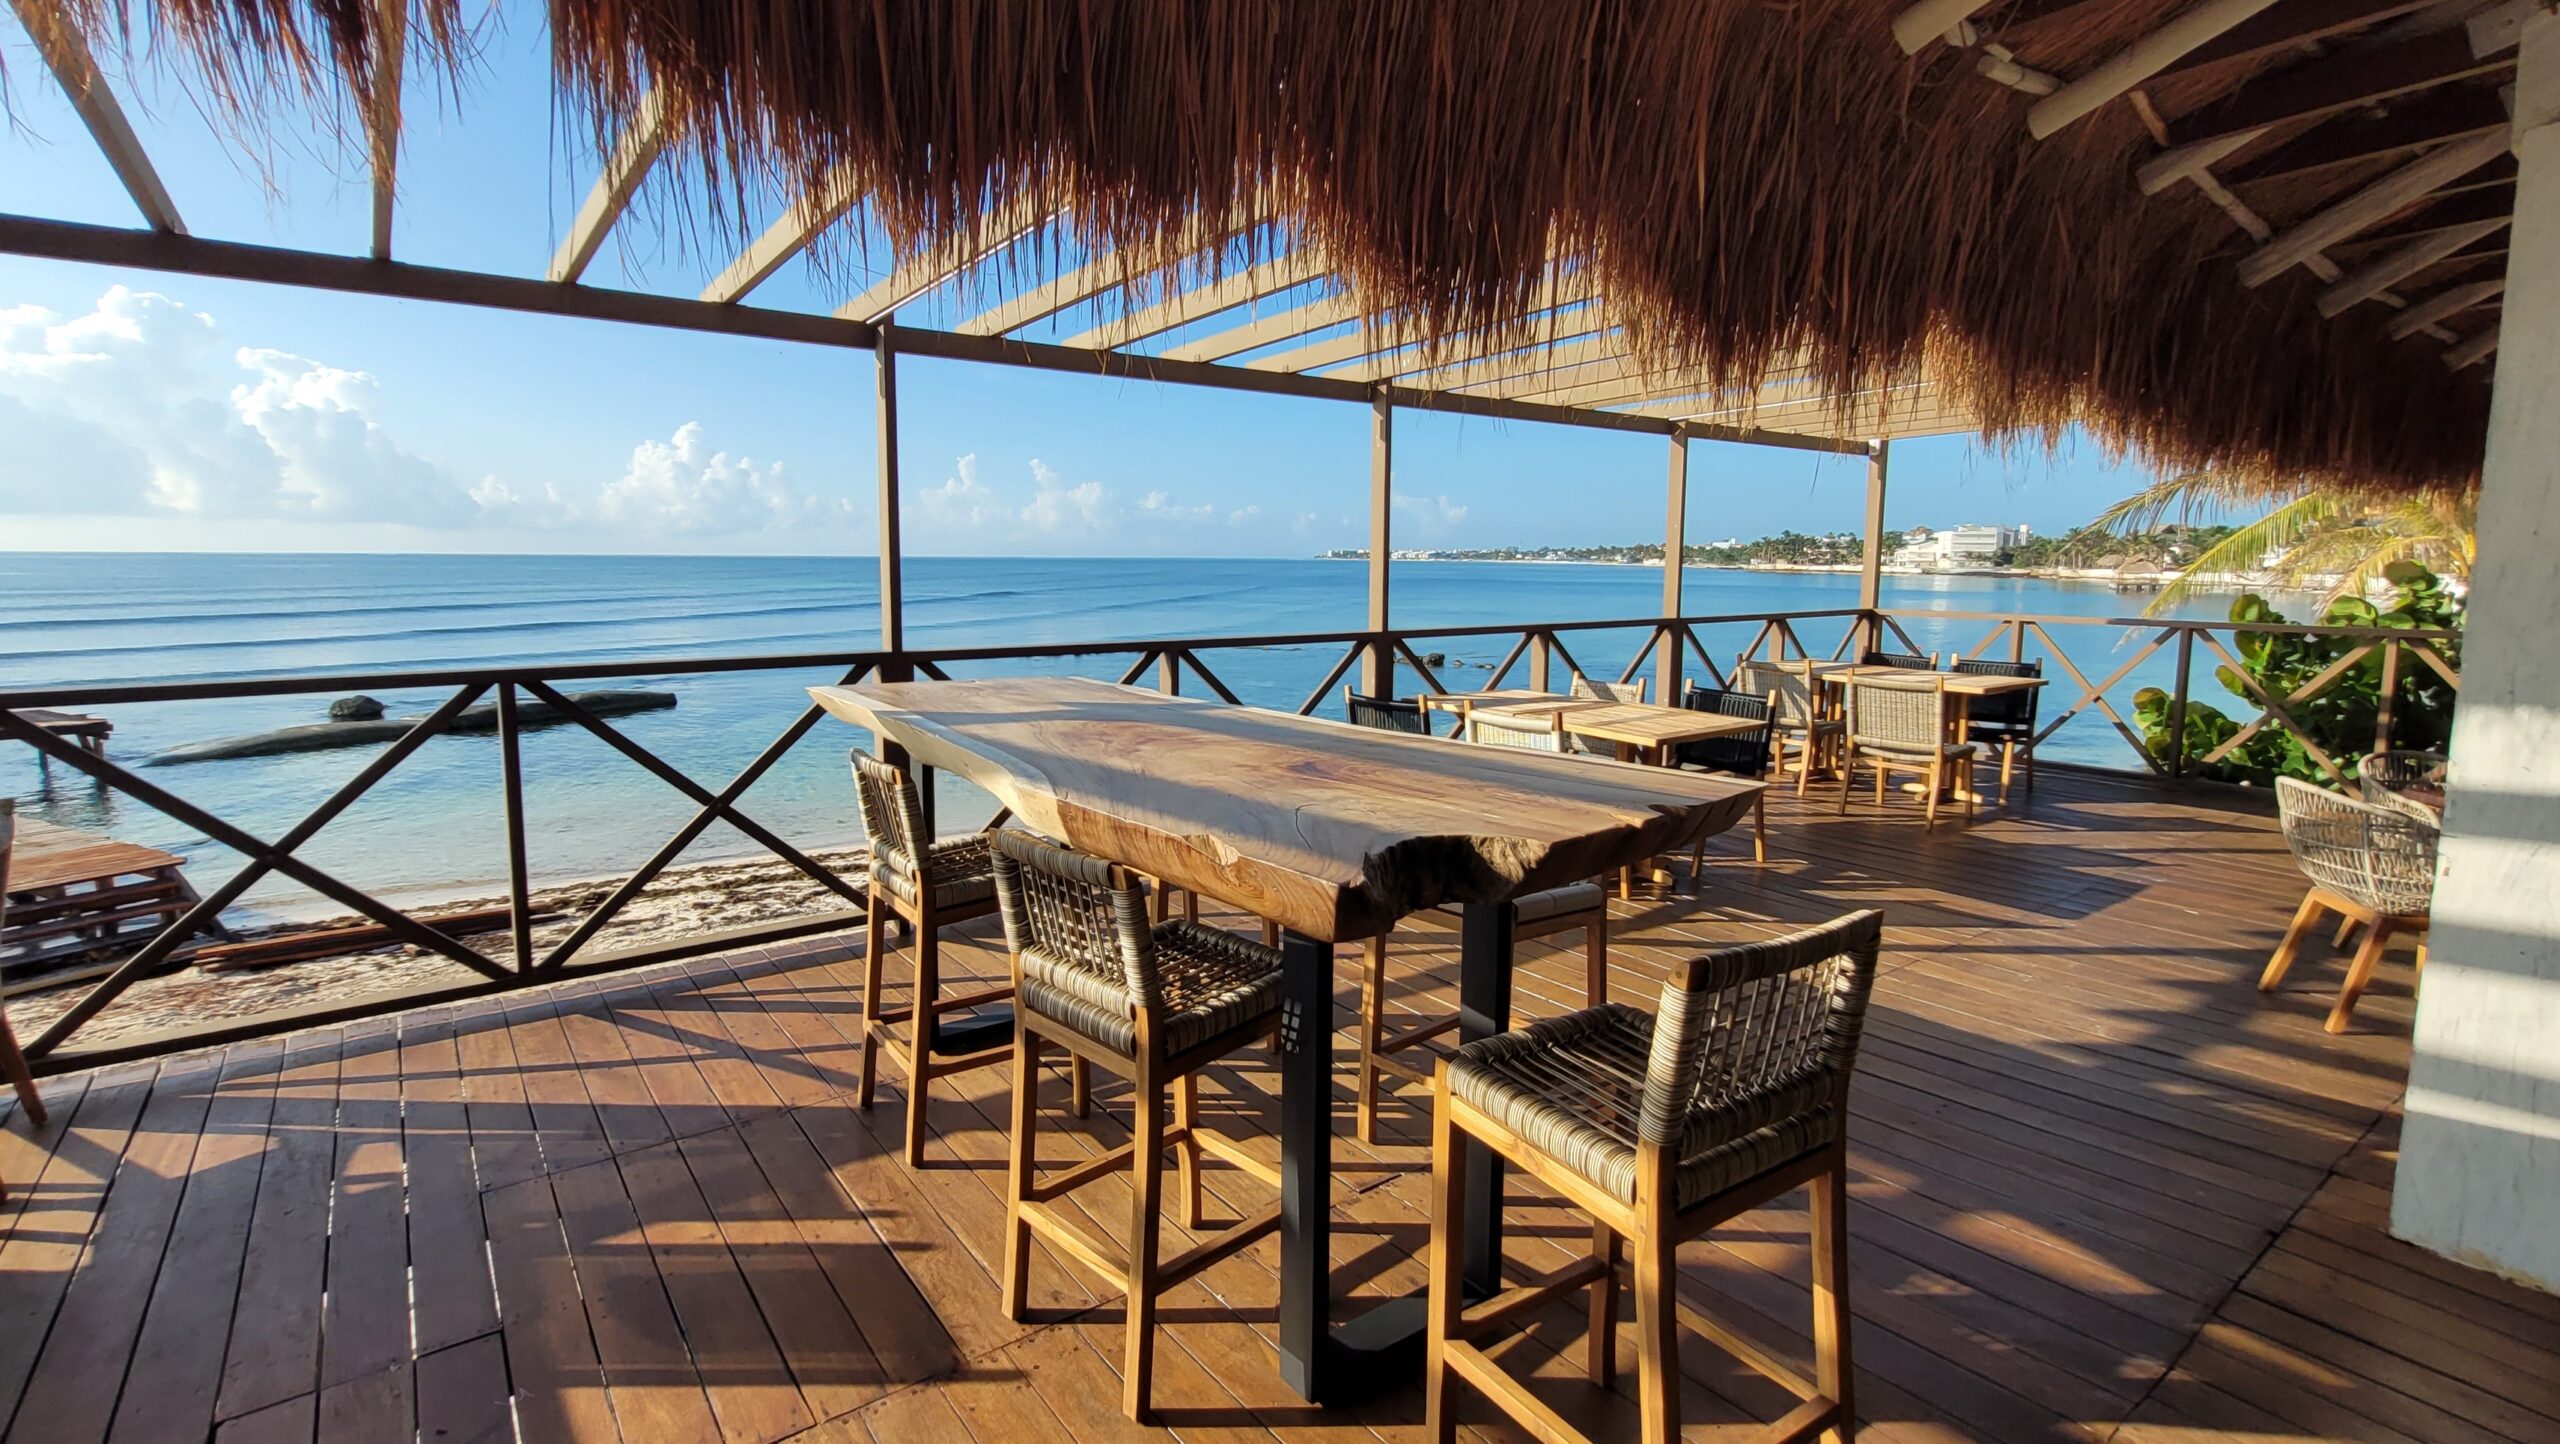 Hyatt Ziva Riviera Cancun – Restaurants Review